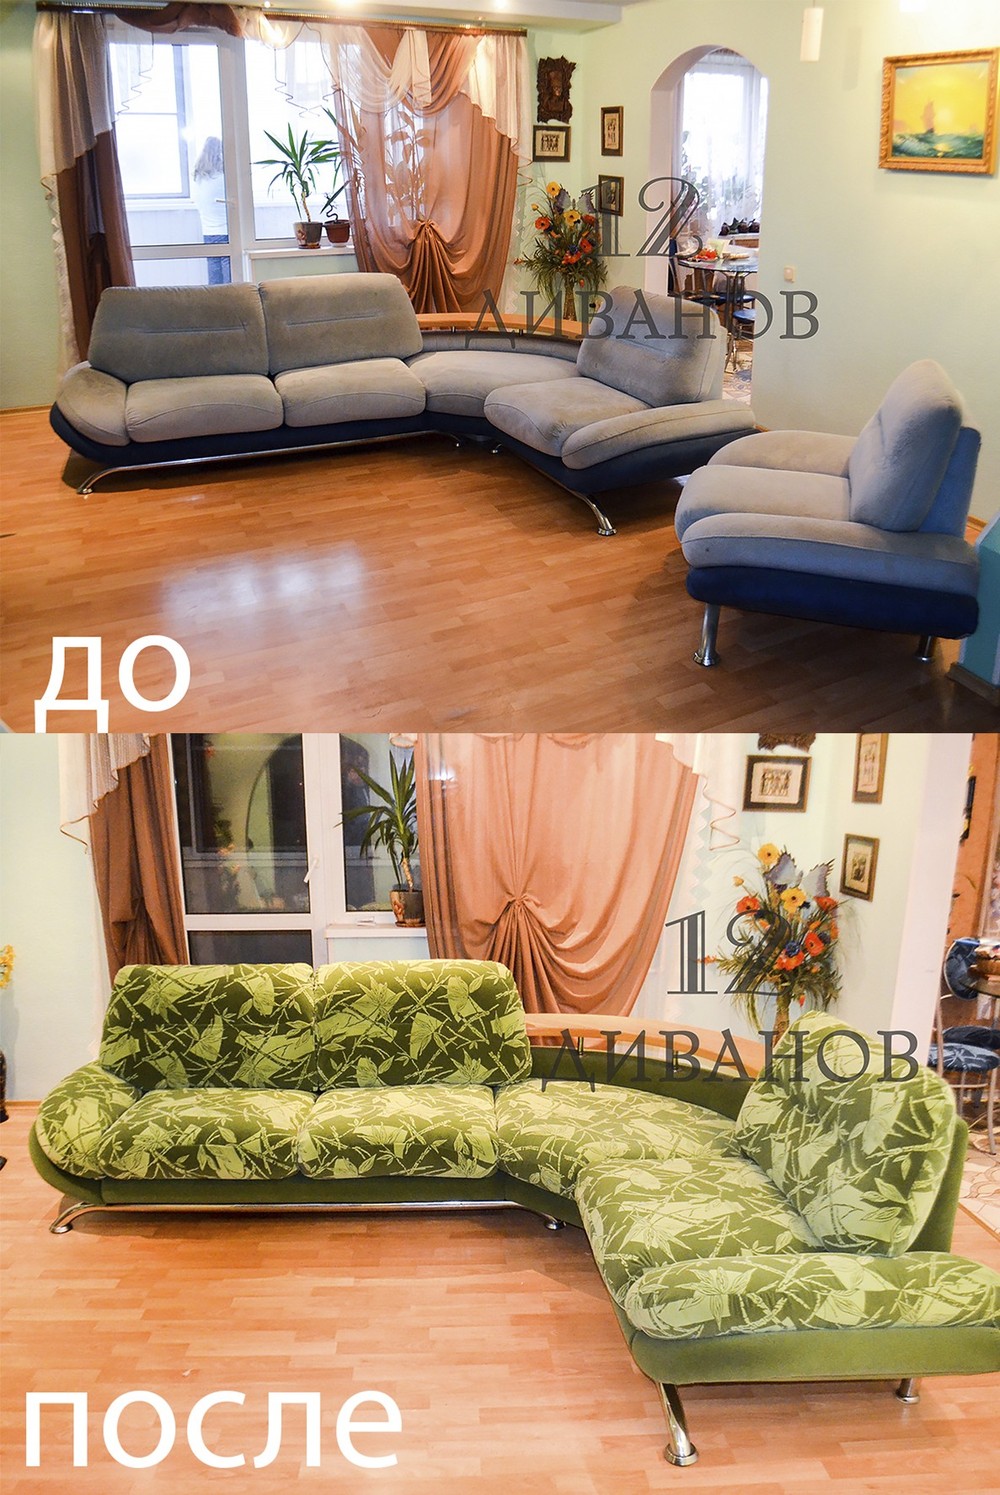 Обивка дивана: какую ткань выбрать